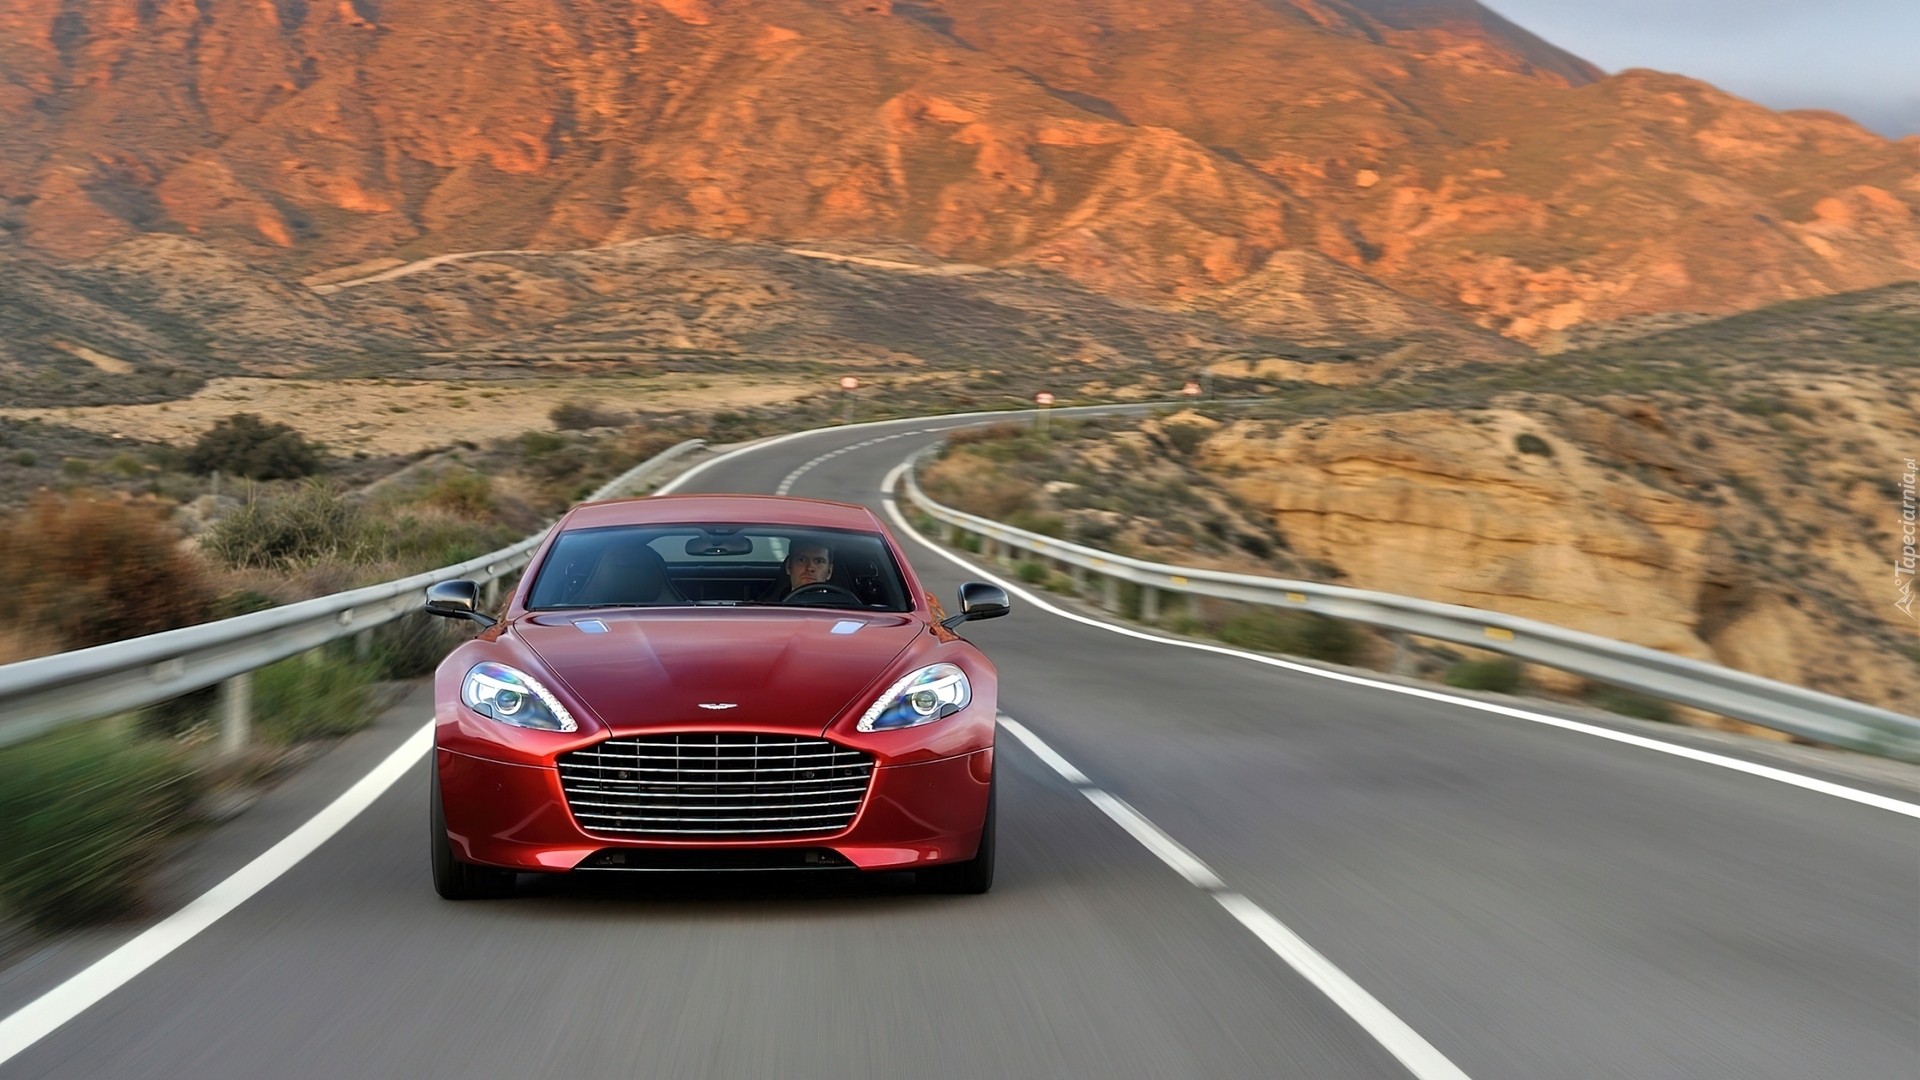 Droga, Góry, Aston Martin